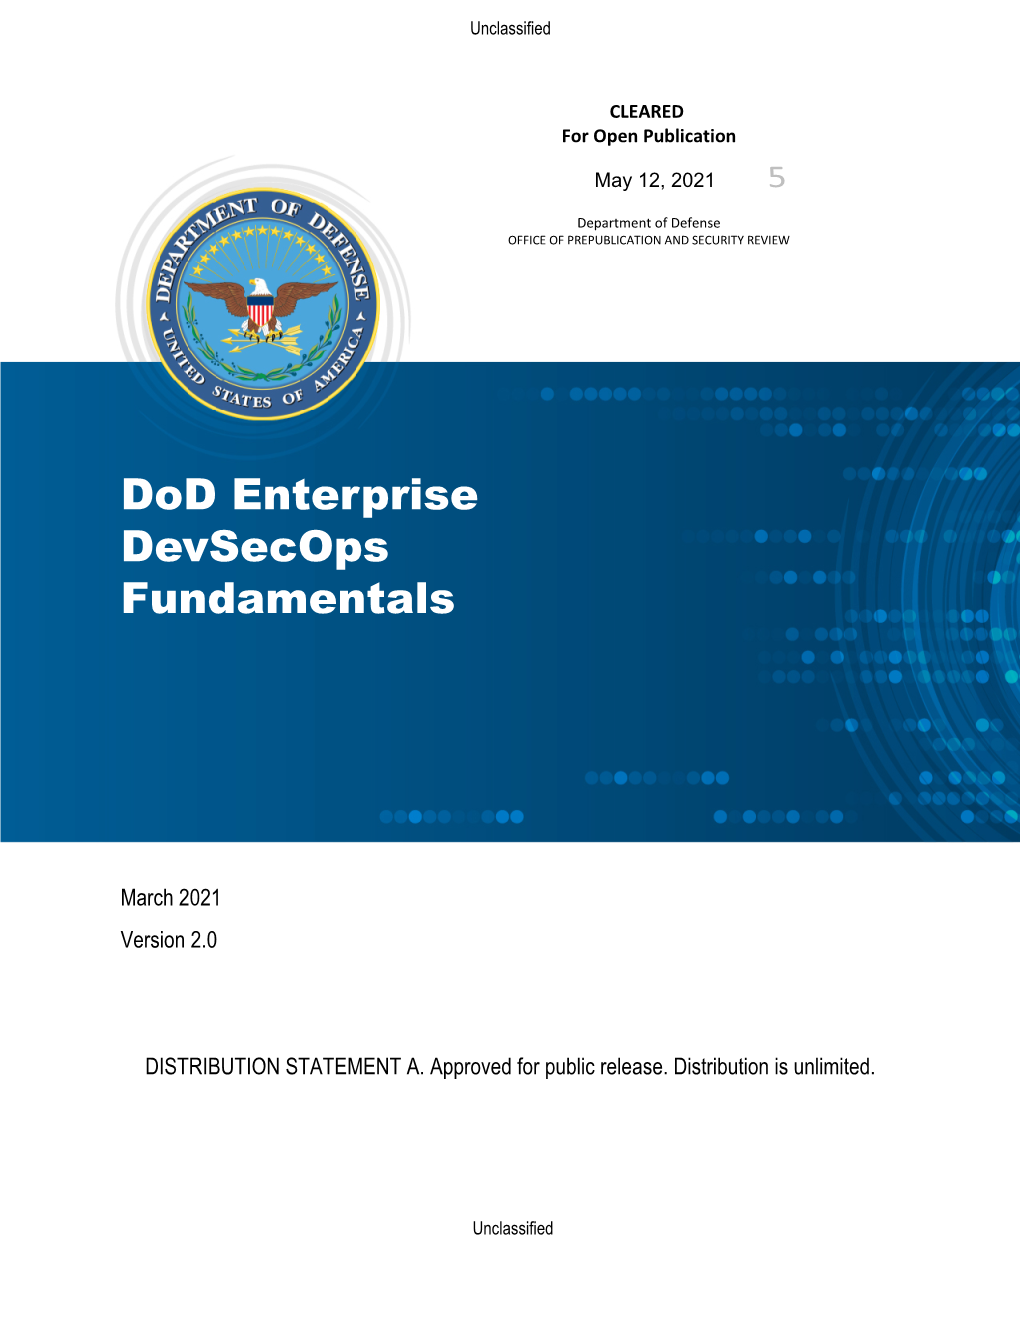 Dod Enterprise Devsecops Fundamentals